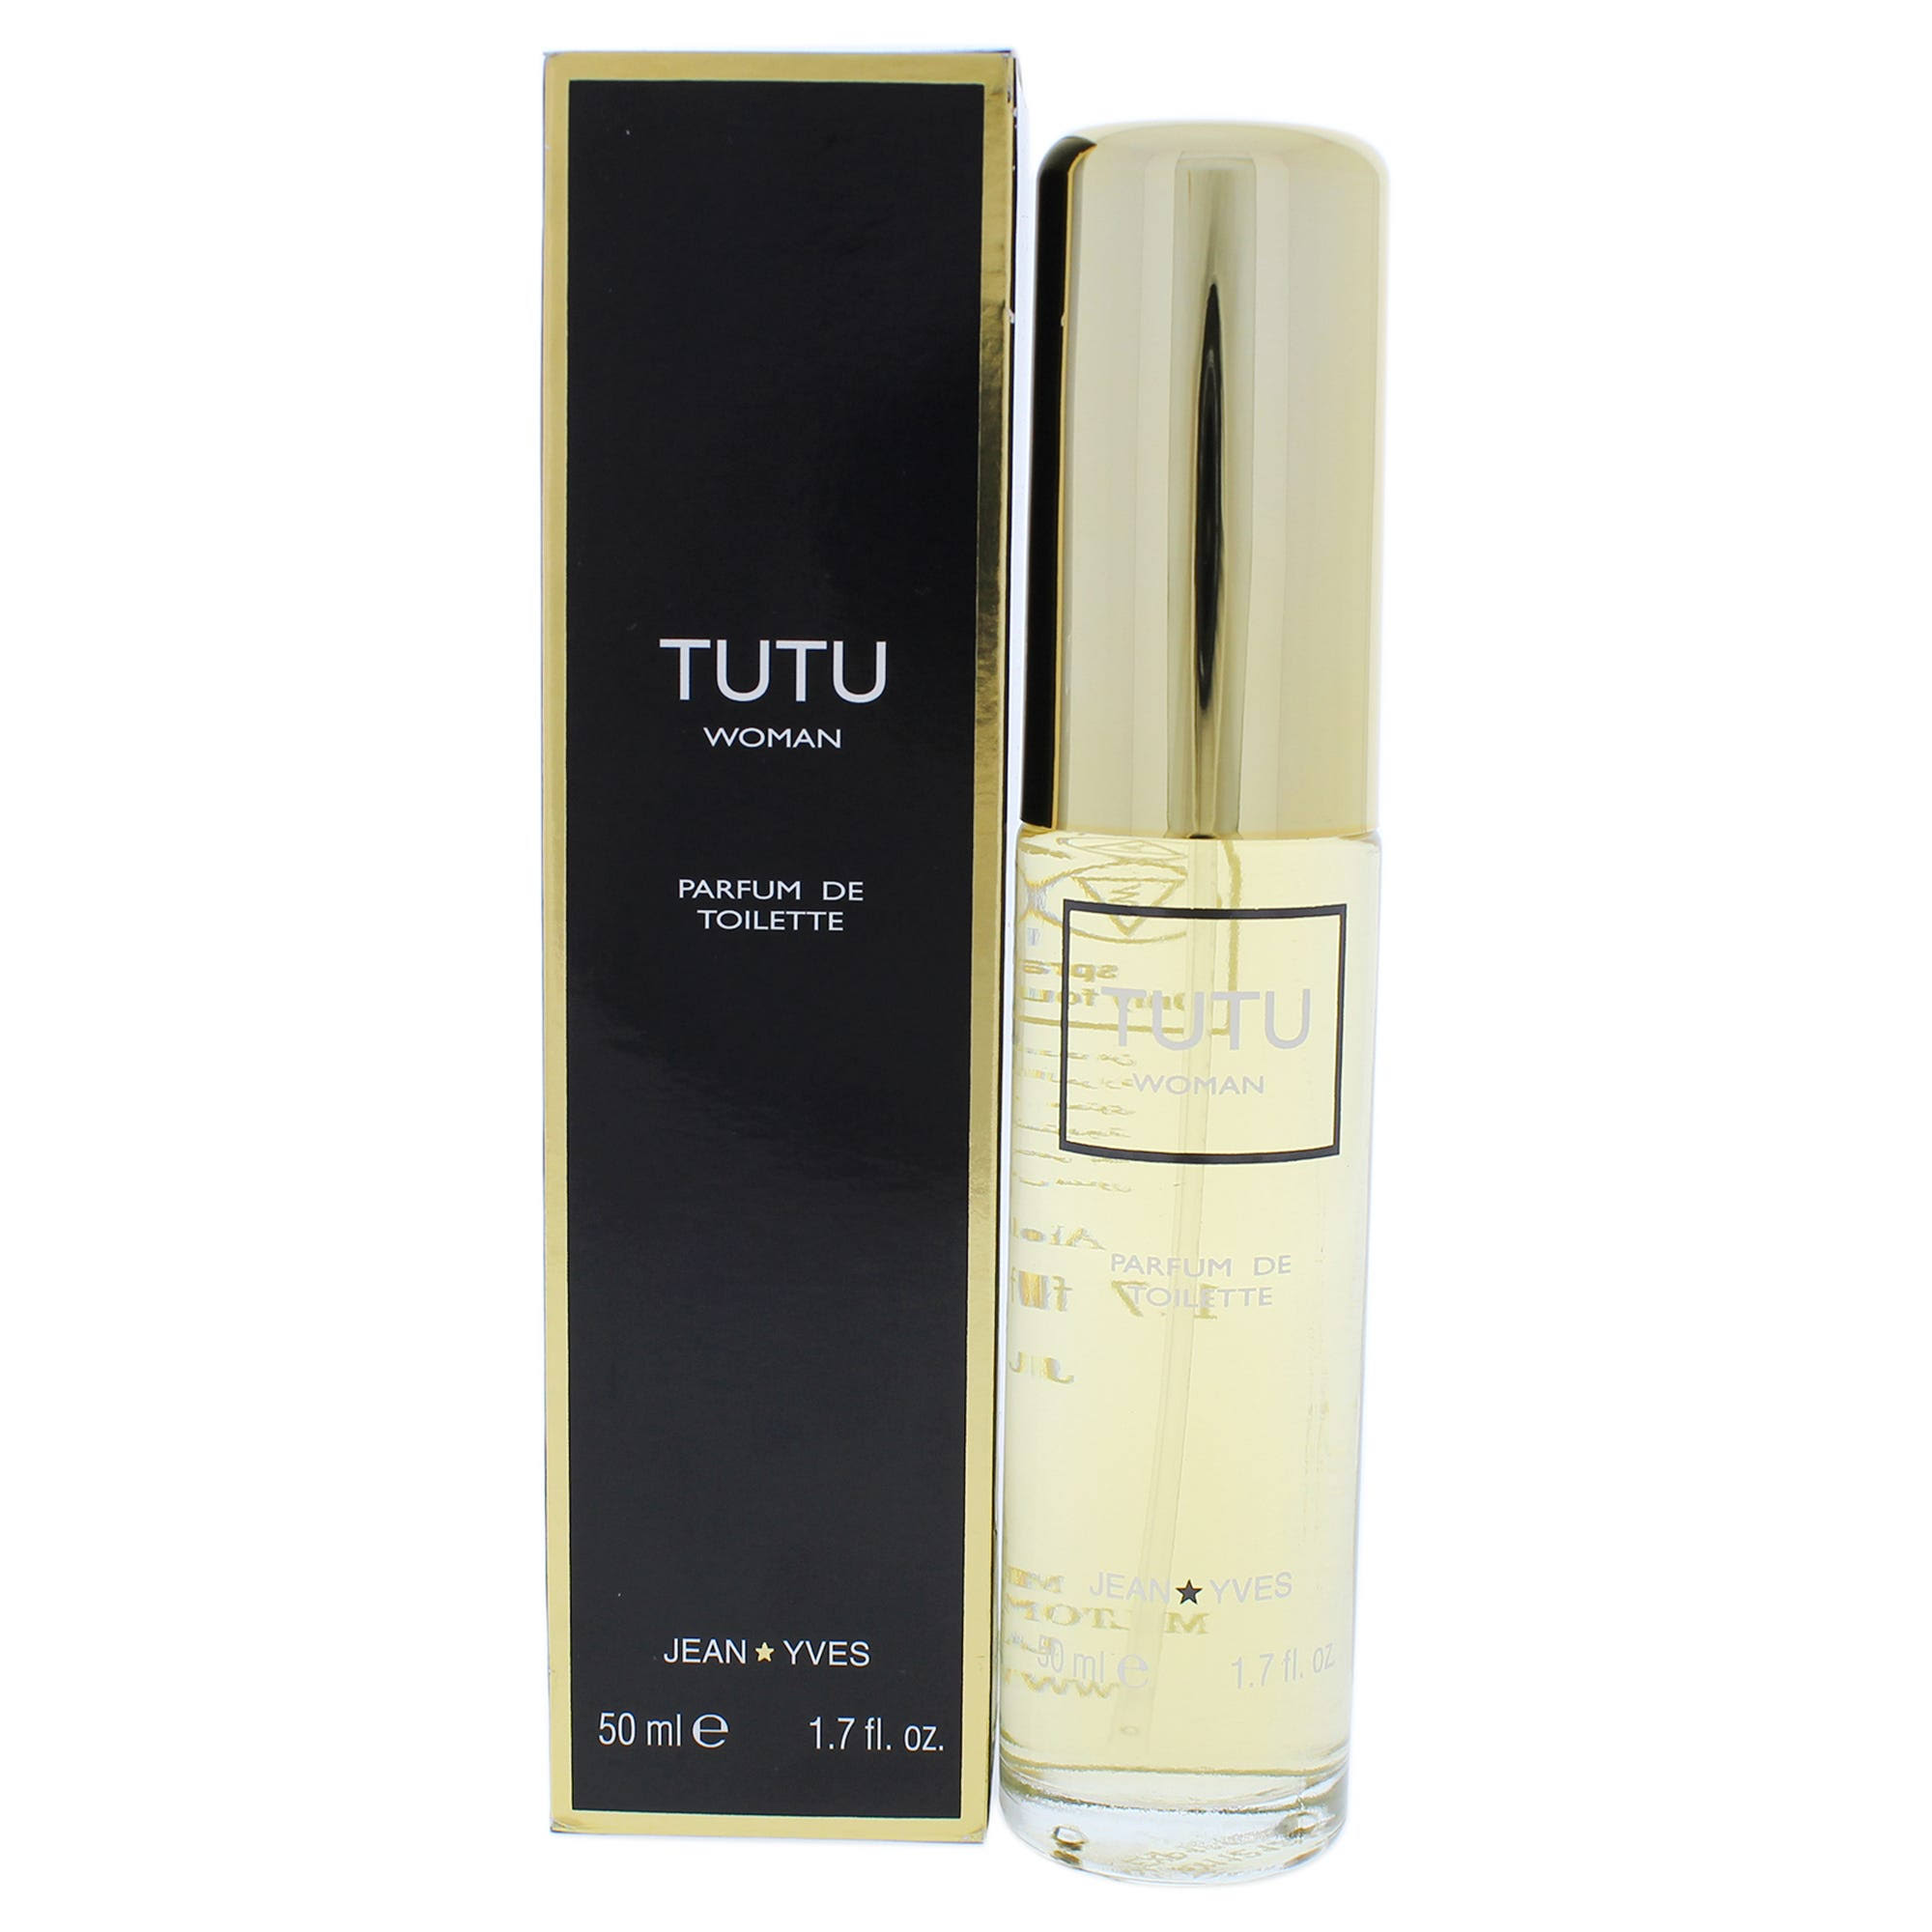 Tutu Woman Perfume - 50ml